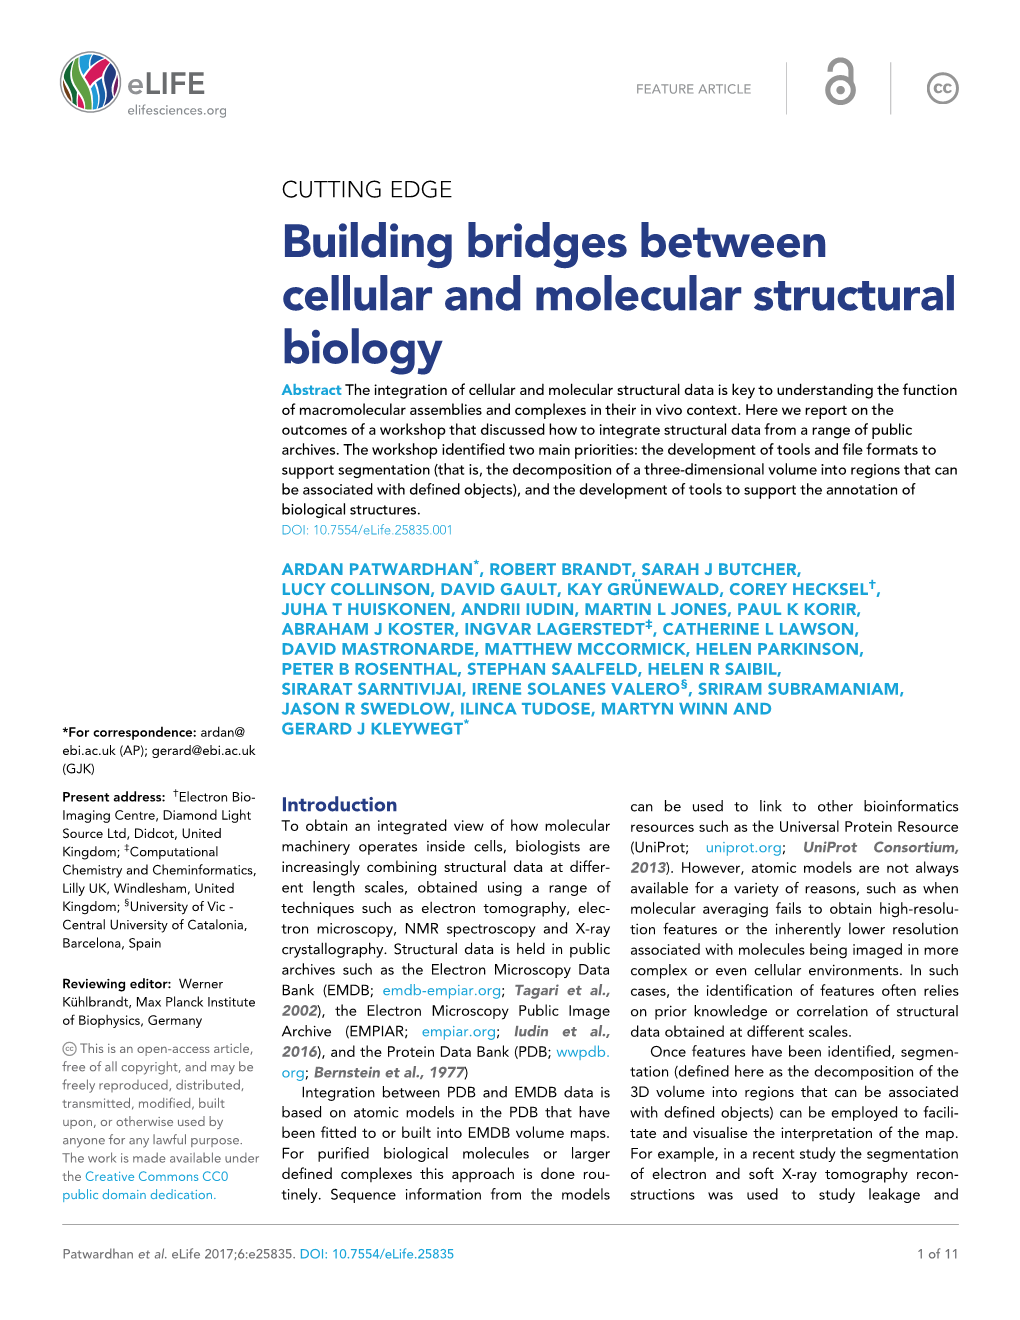 Building Bridges Between Cellular